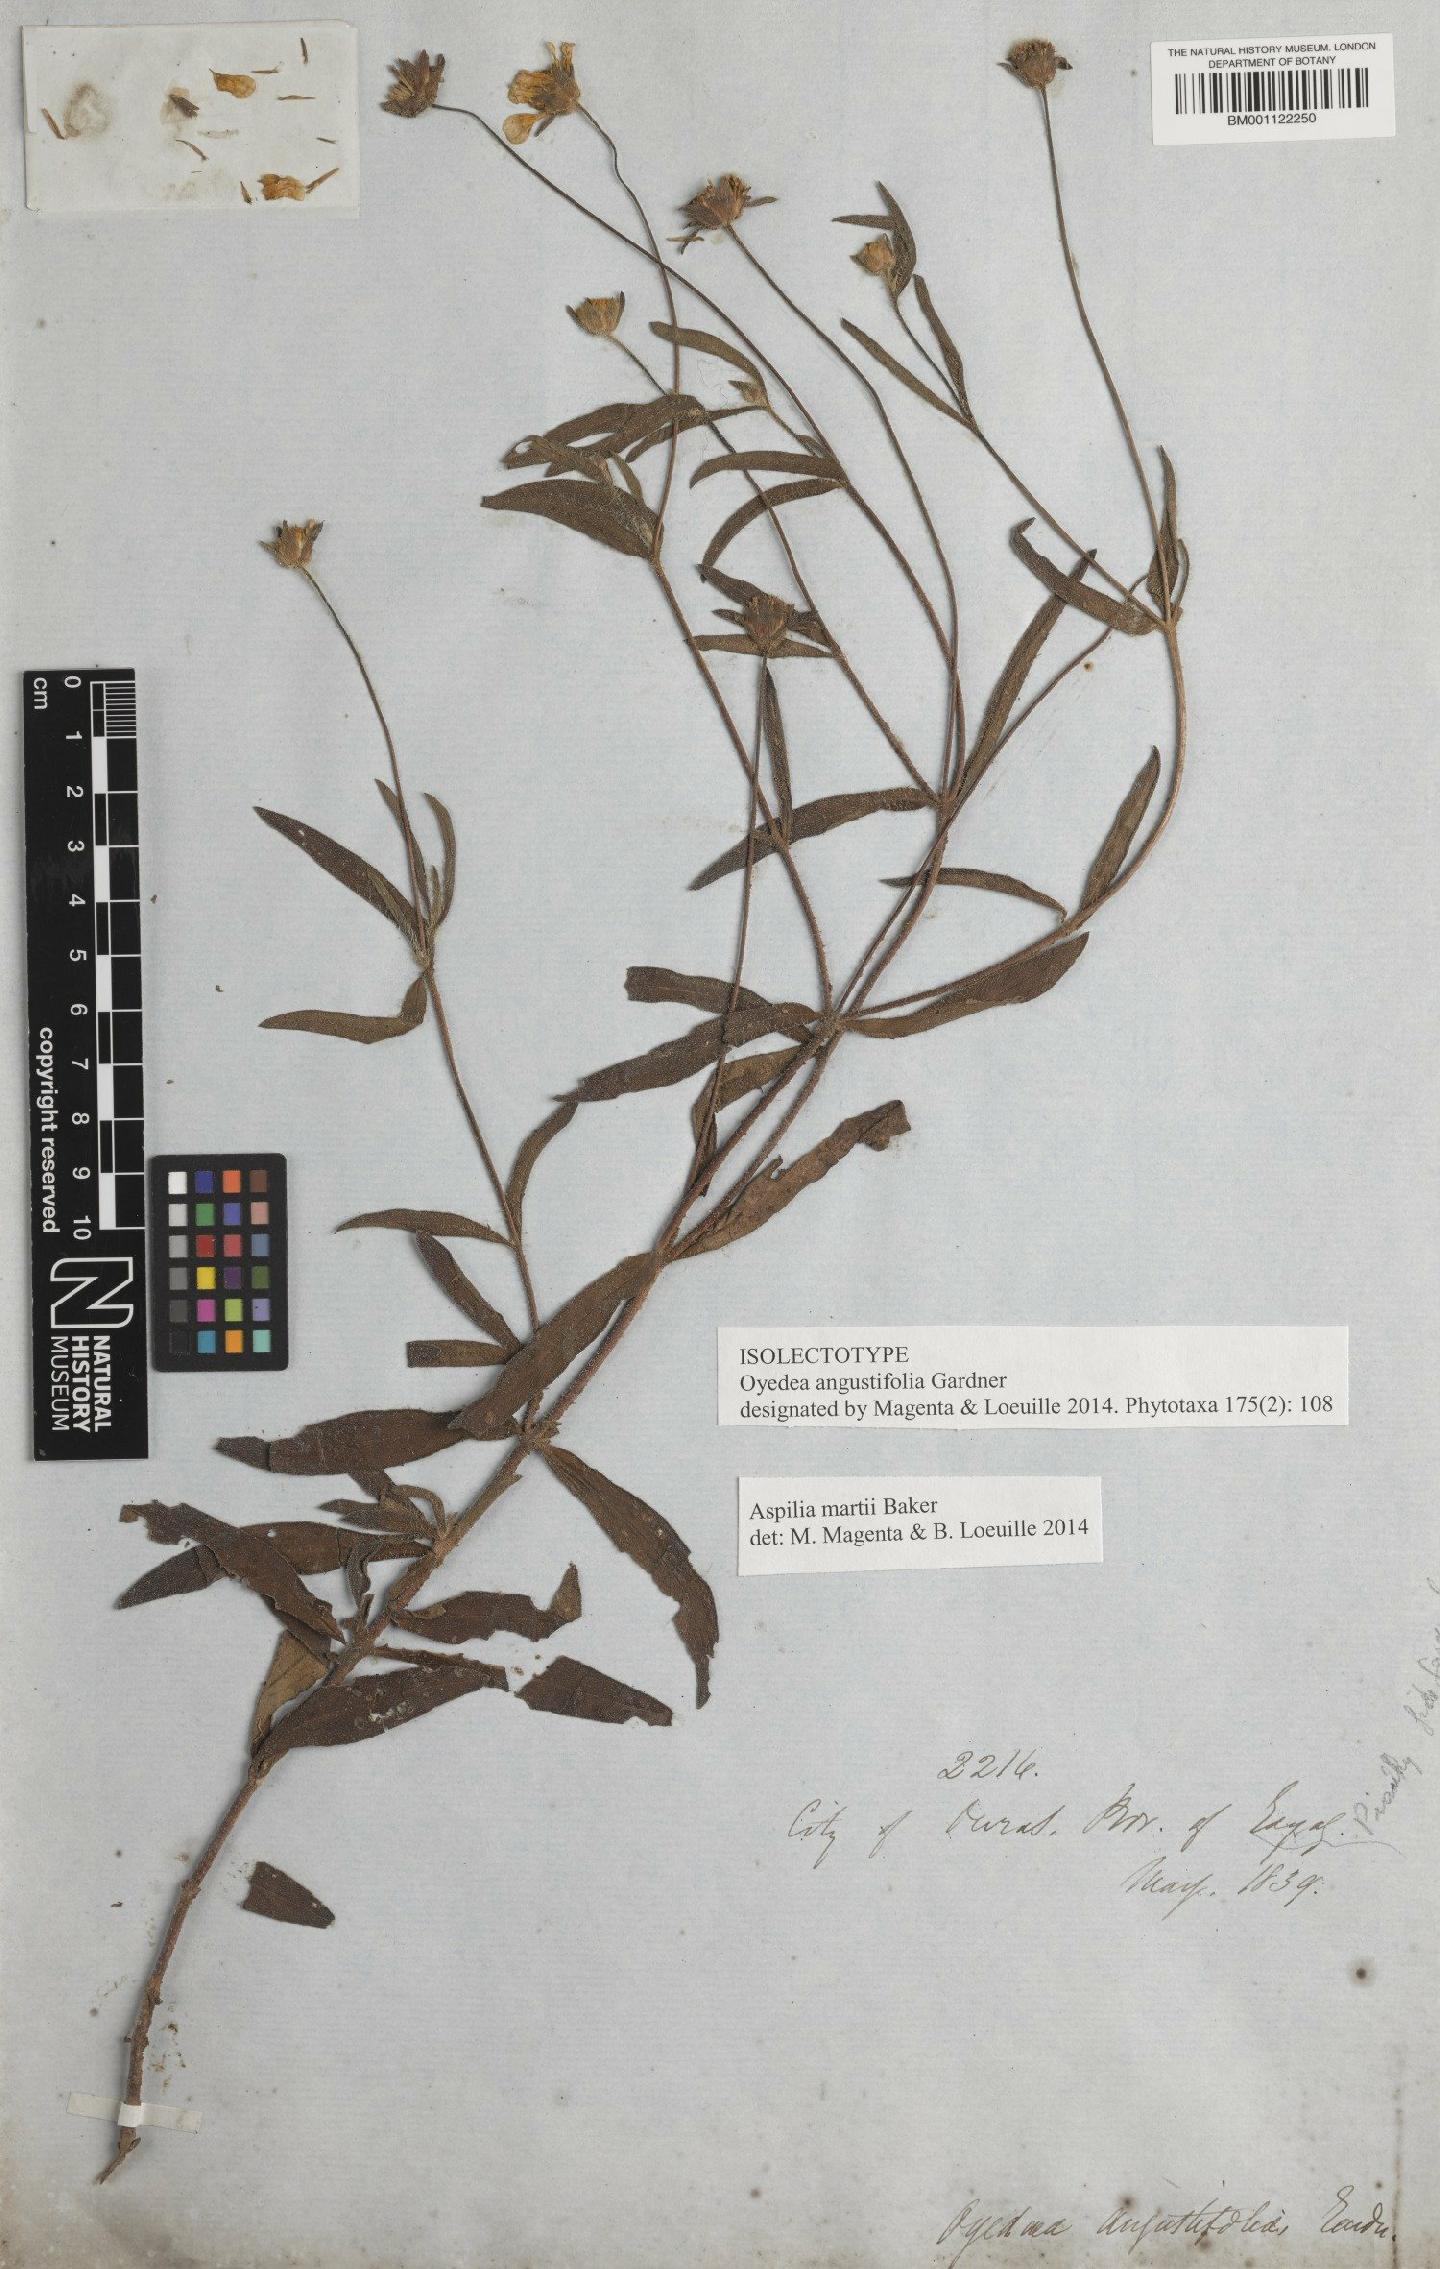 To NHMUK collection (Aspilia martii Baker; Isolectotype; NHMUK:ecatalogue:2941368)